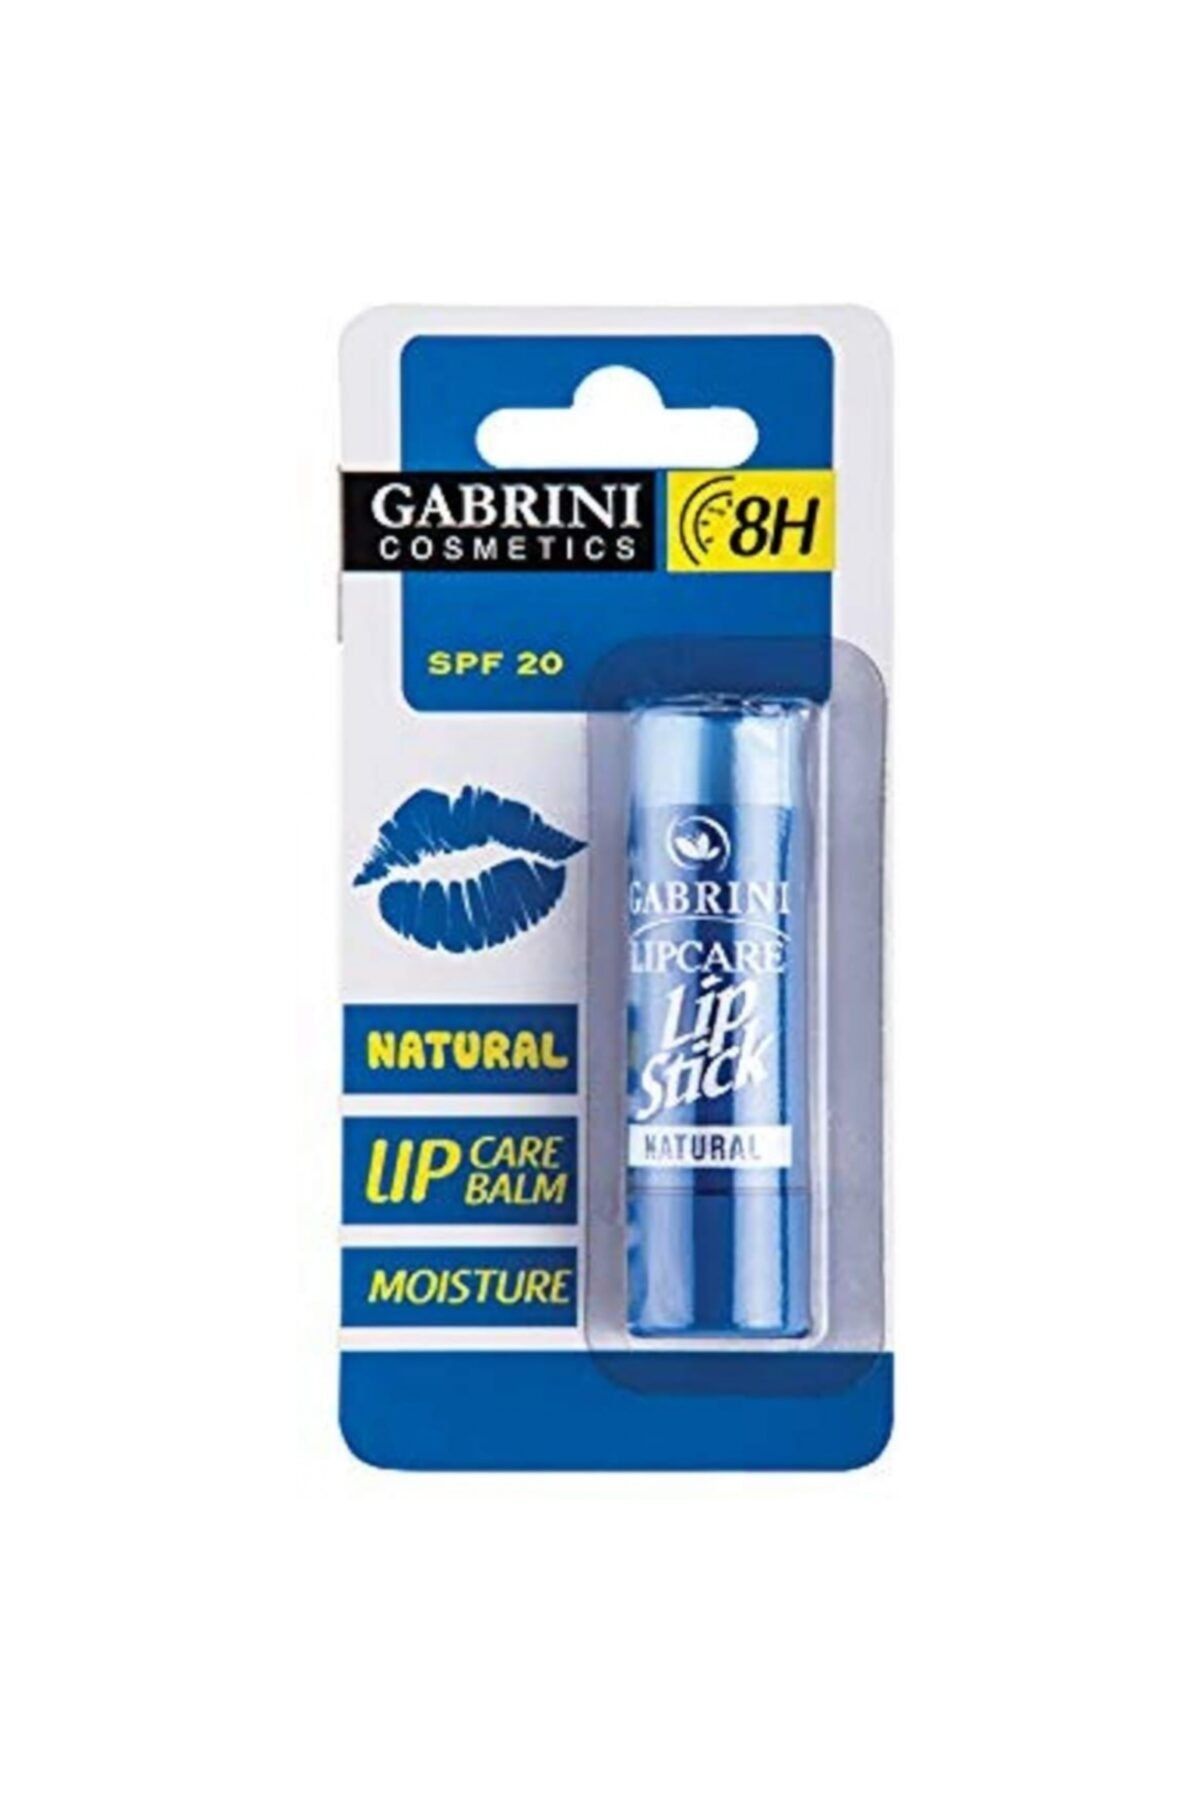 Gabrini Lip Care Natural